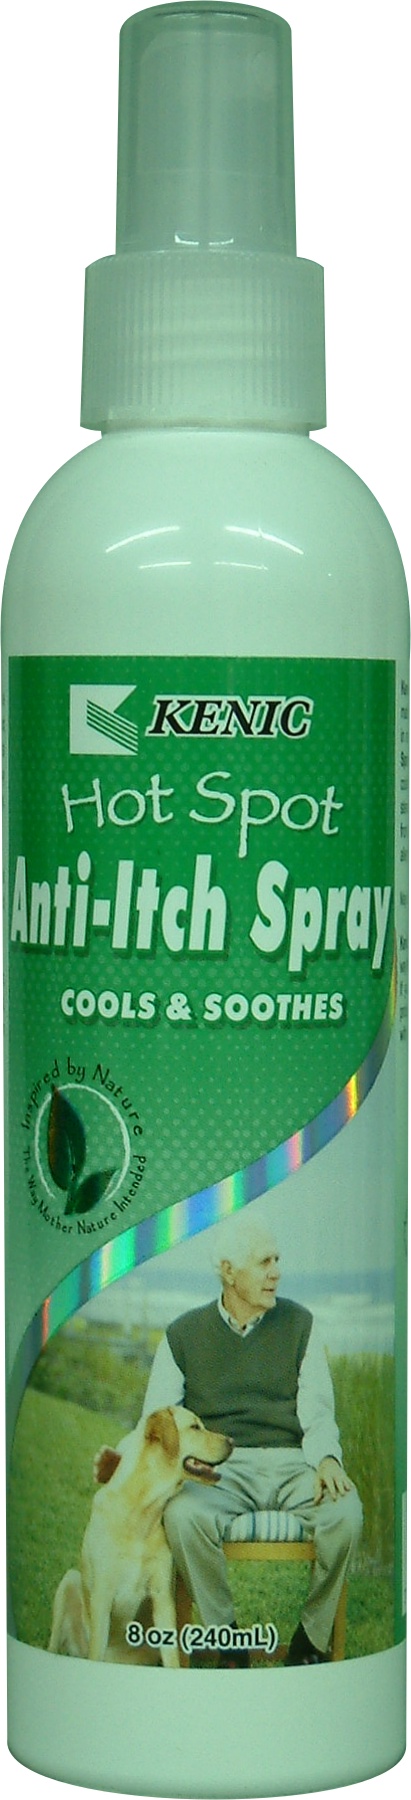 Kenic Hot Spot Anit-Itch Spray